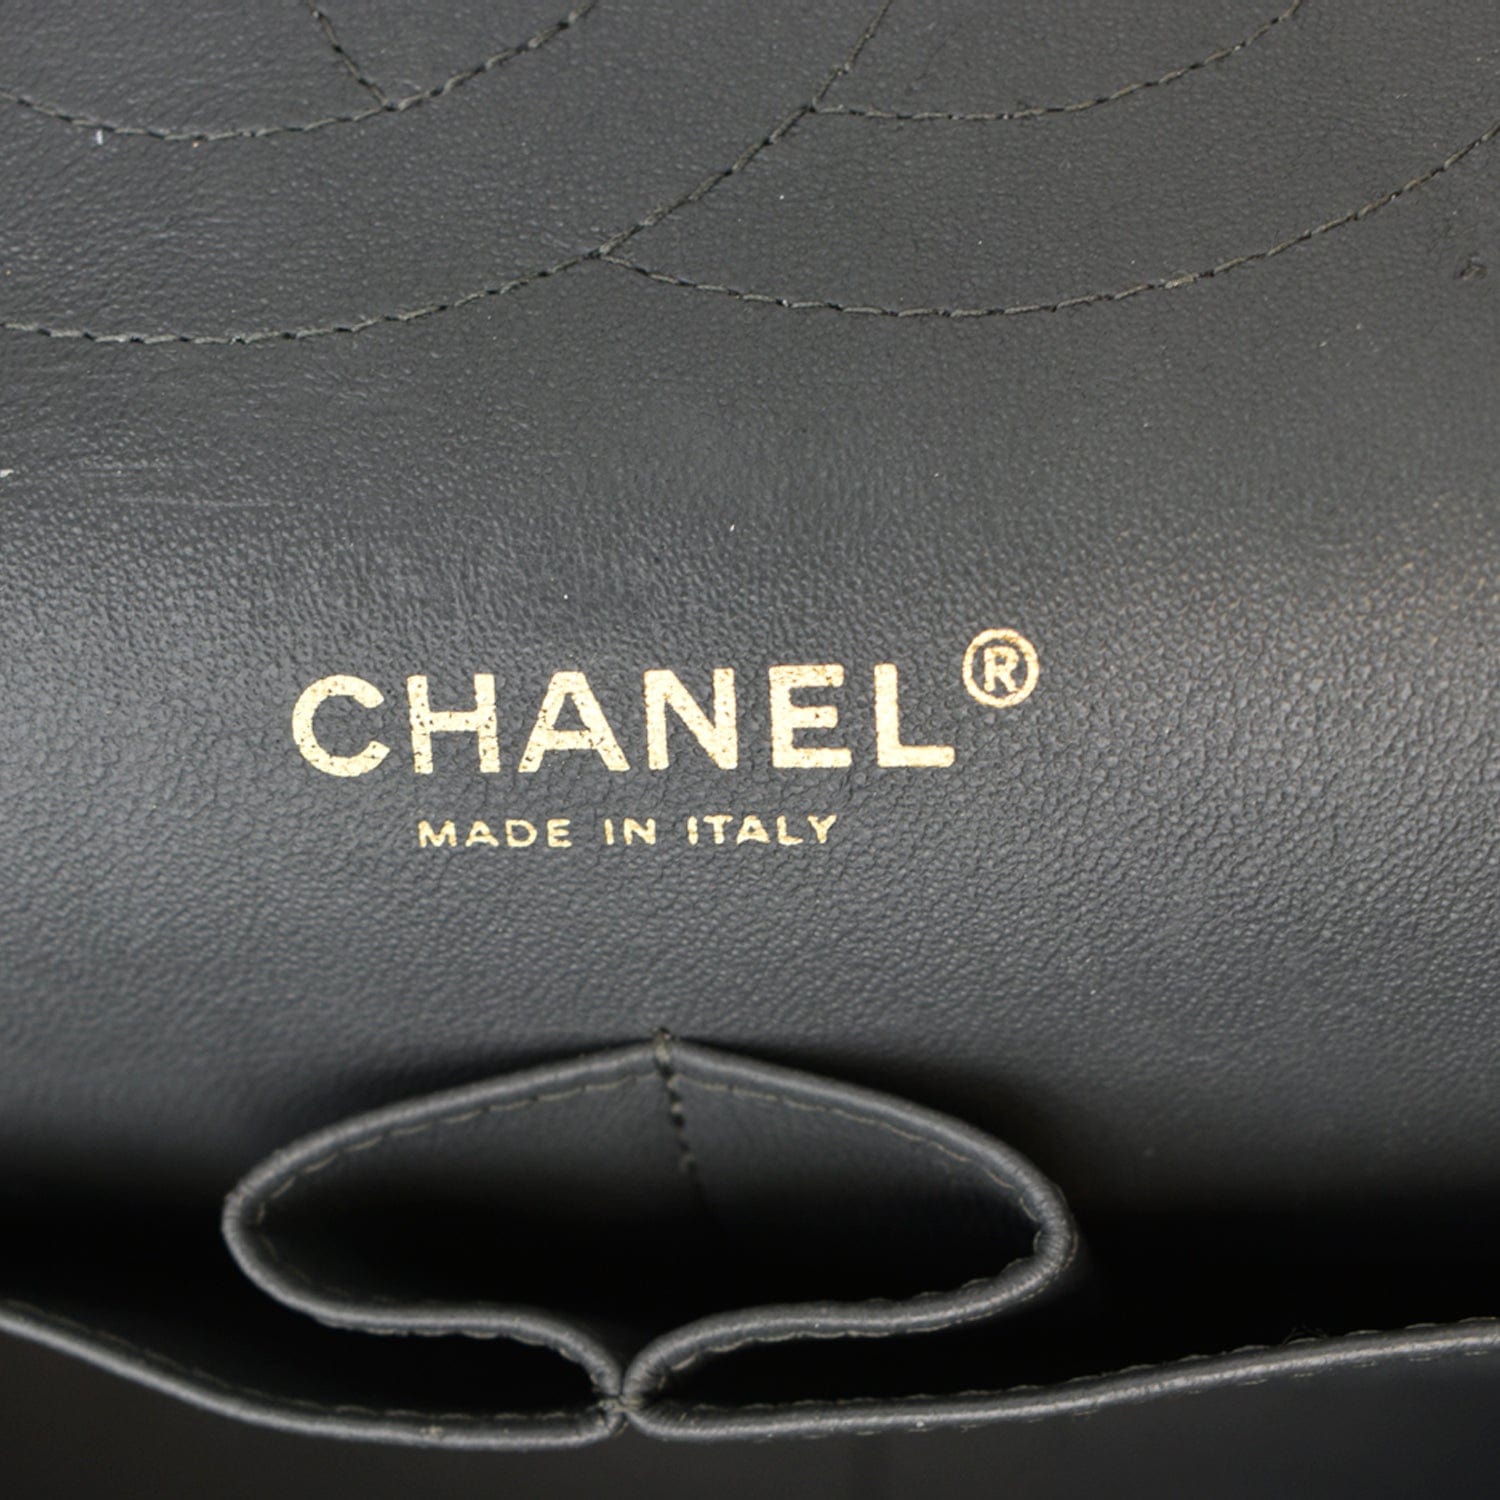 Chanel Jumbo Silver Chain Lambskin Classic Flap Bag NW3444